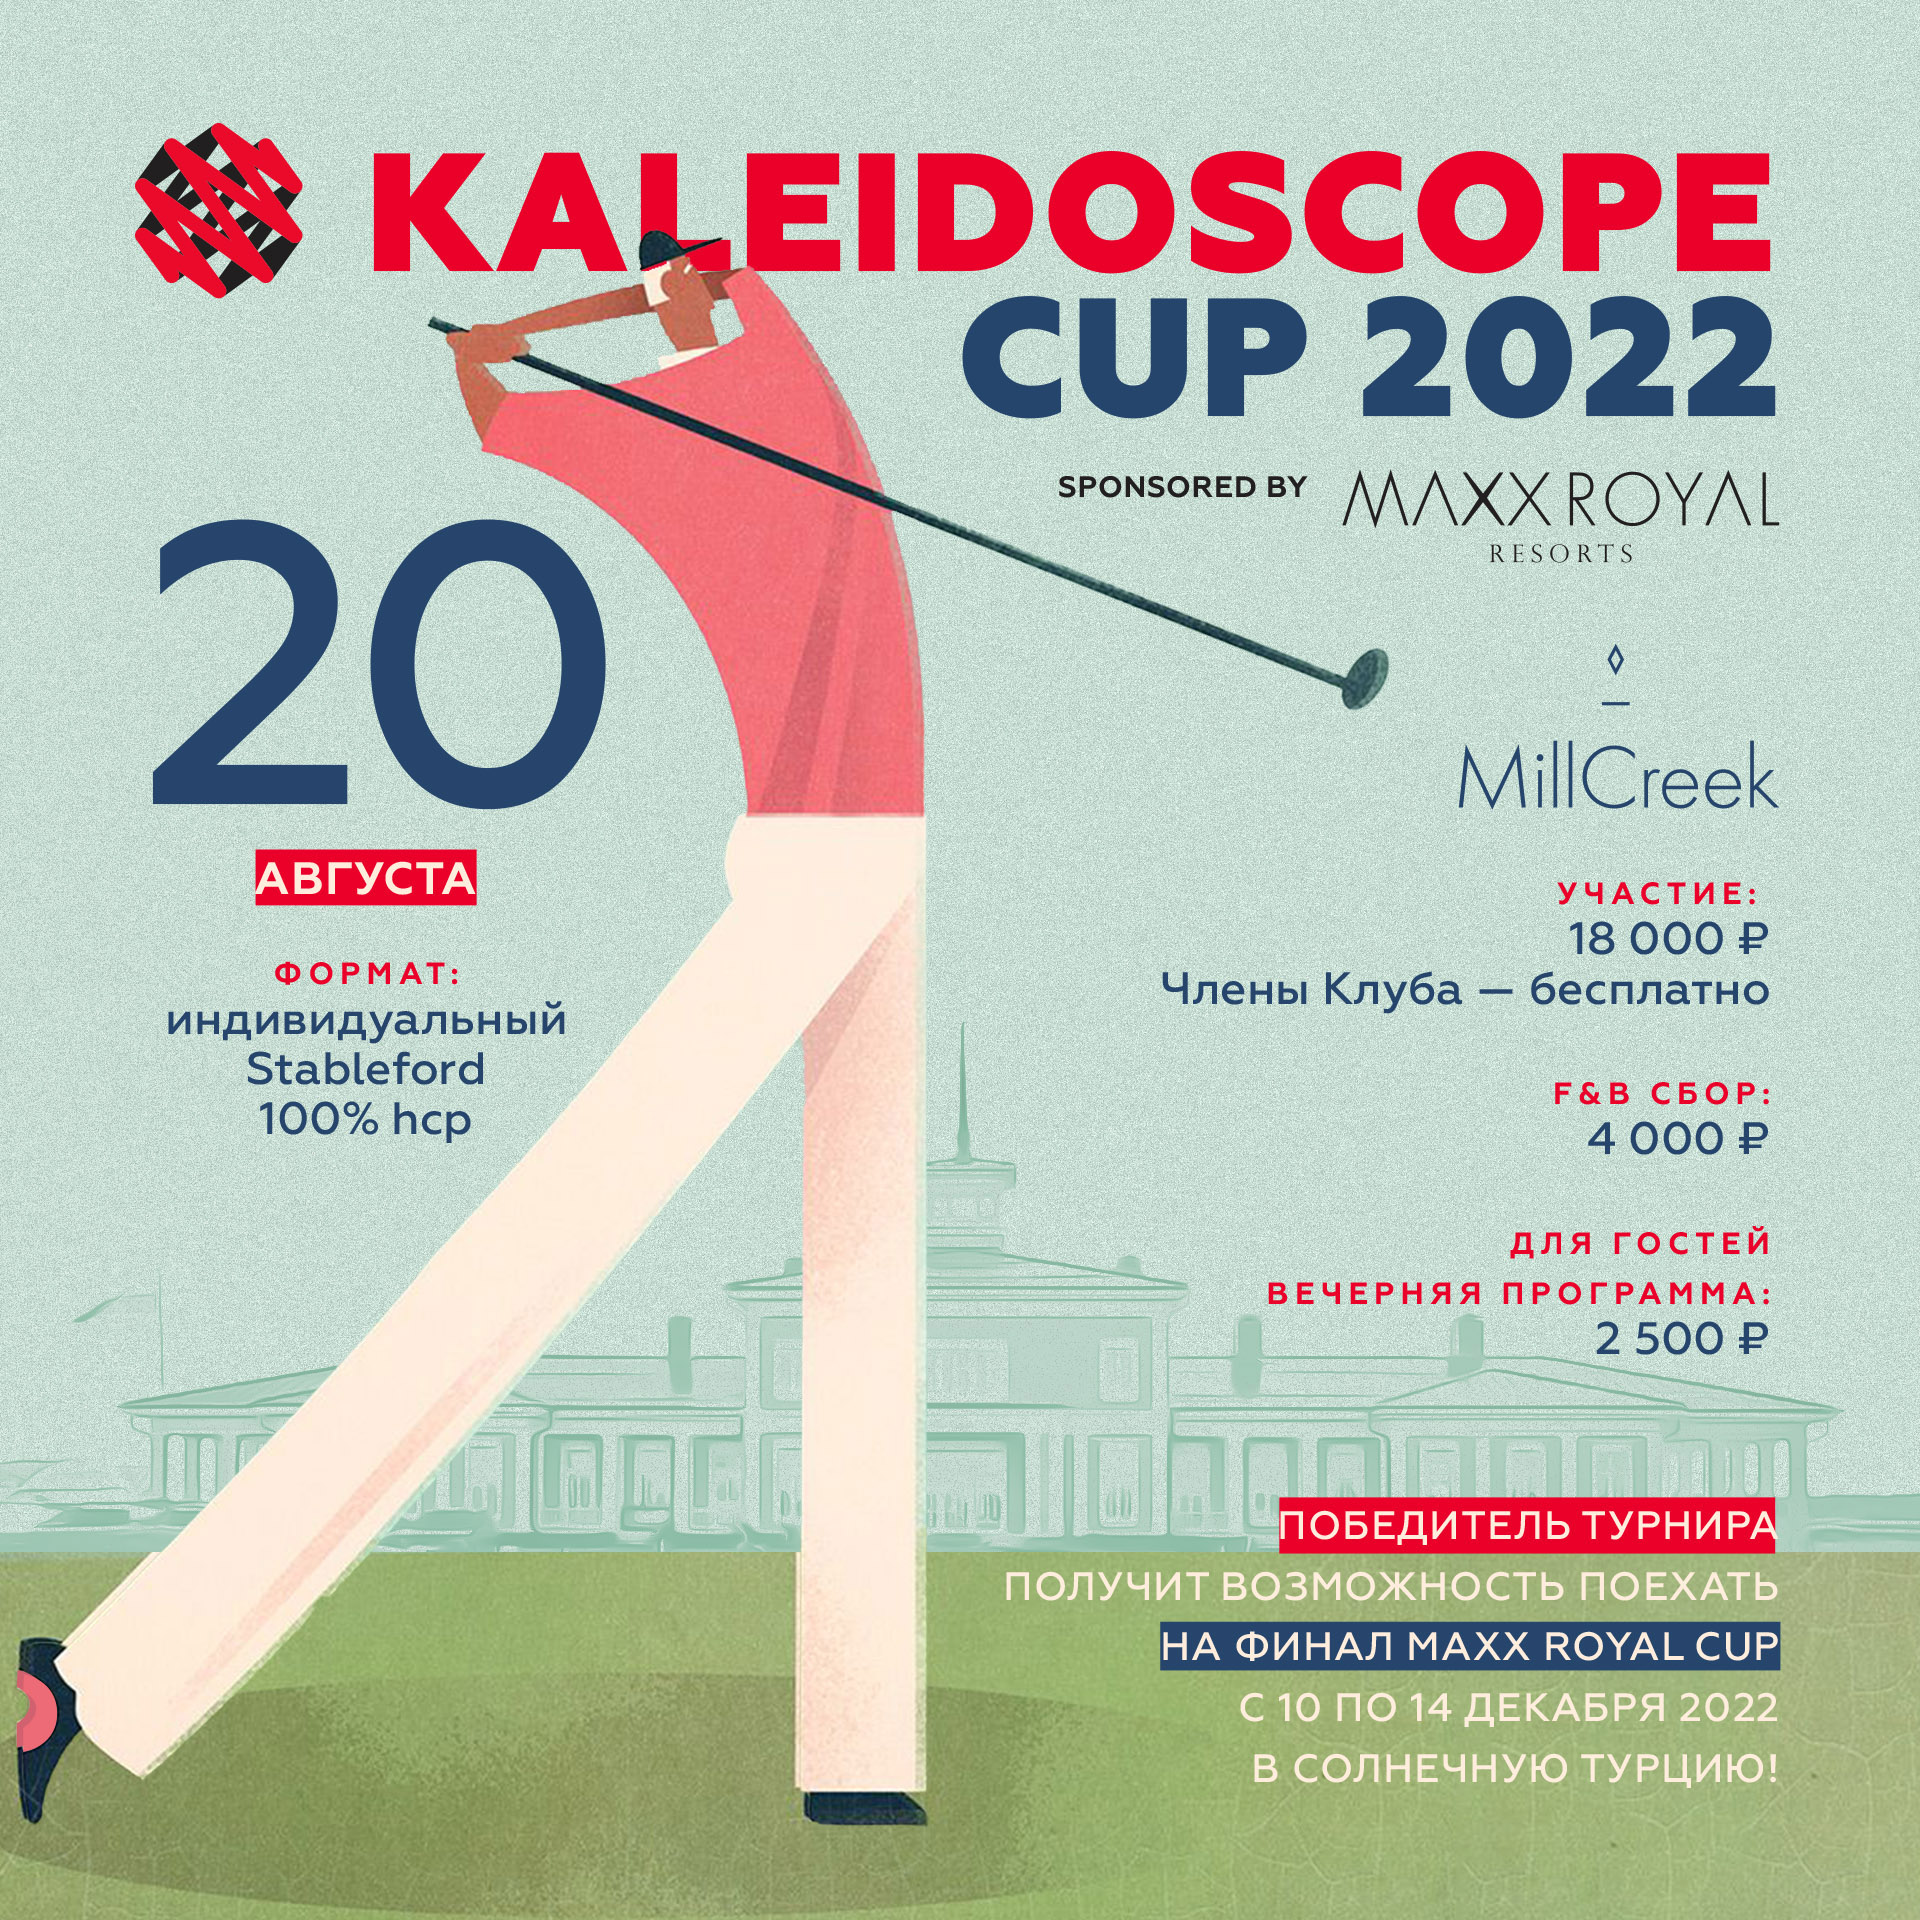 KaleidoscopeCup 2022 by MaxxRoyal Belek Golf Resort